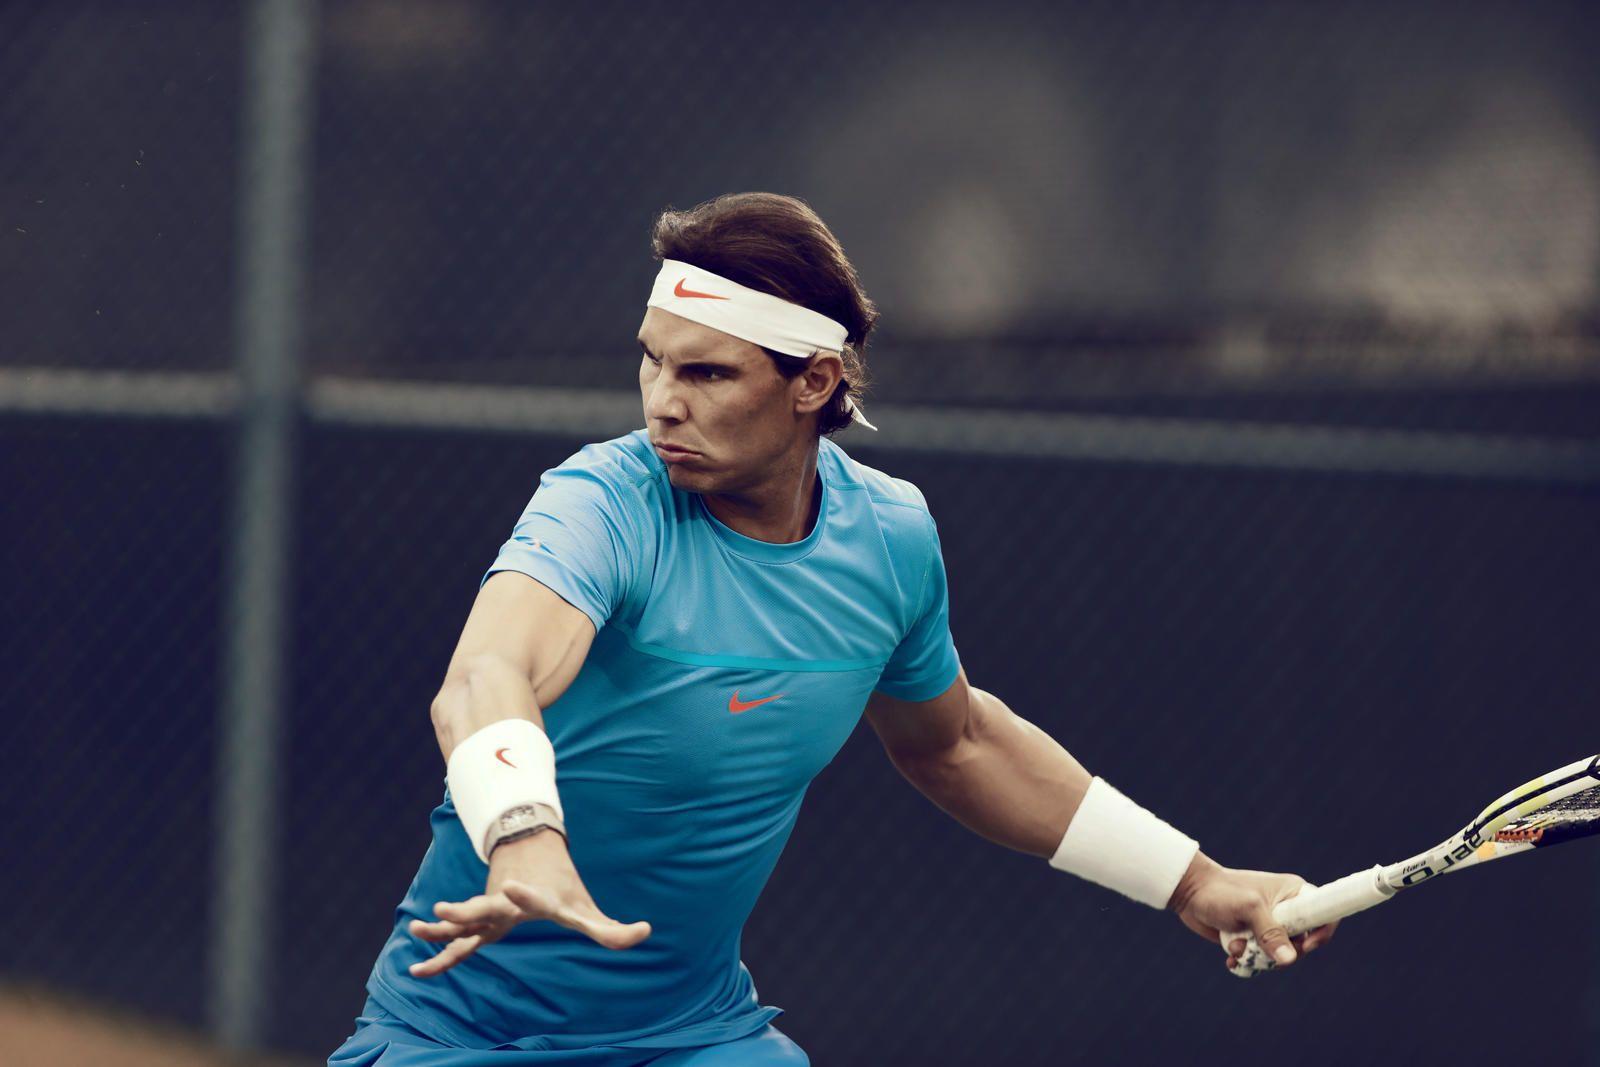 Rafael Nadal Roland Garros 2015 Nike Outfit